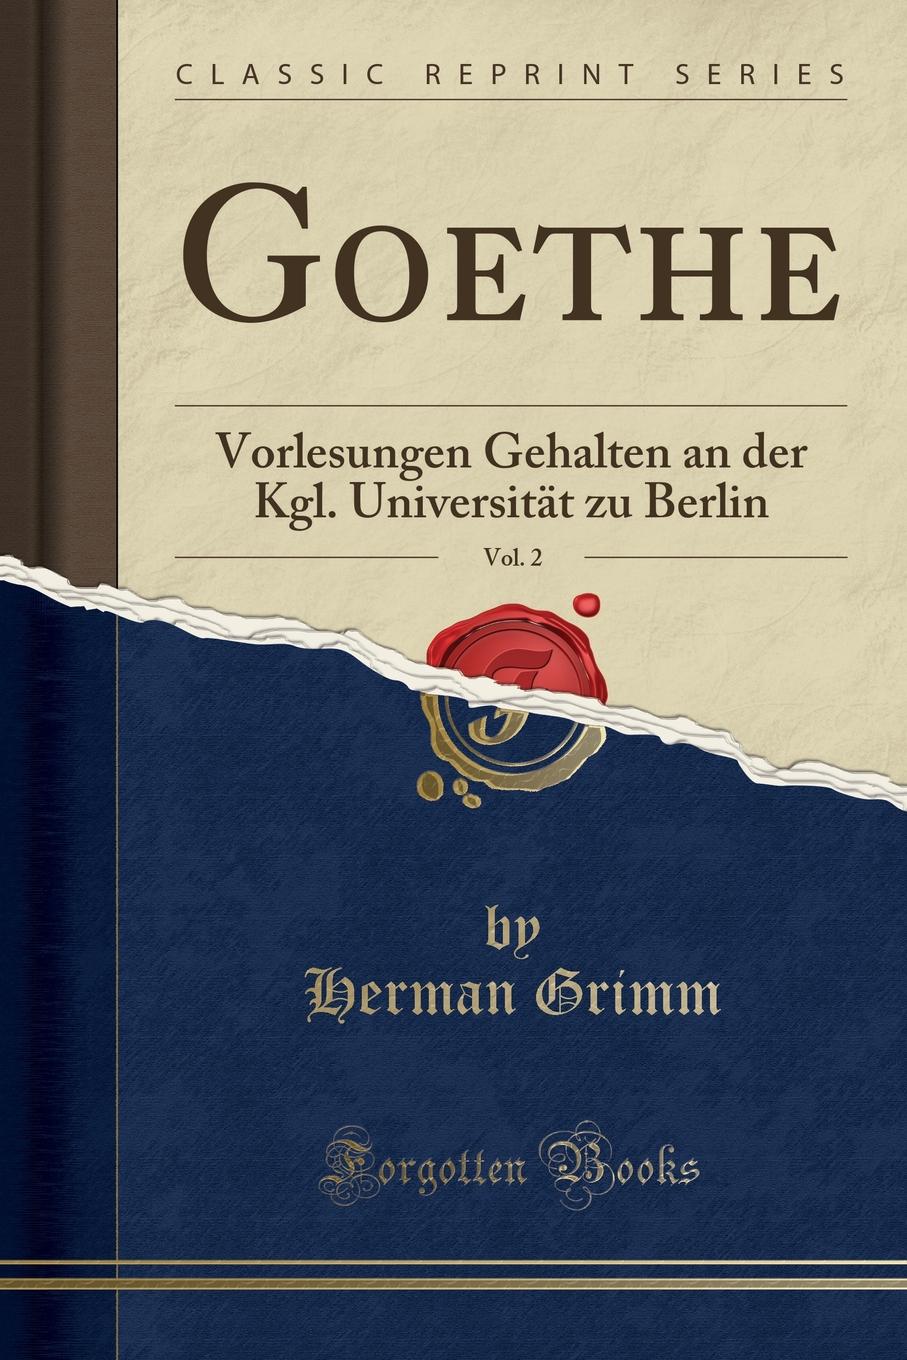 Goethe, Vol. 2. Vorlesungen Gehalten an der Kgl. Universitat zu Berlin (Classic Reprint)